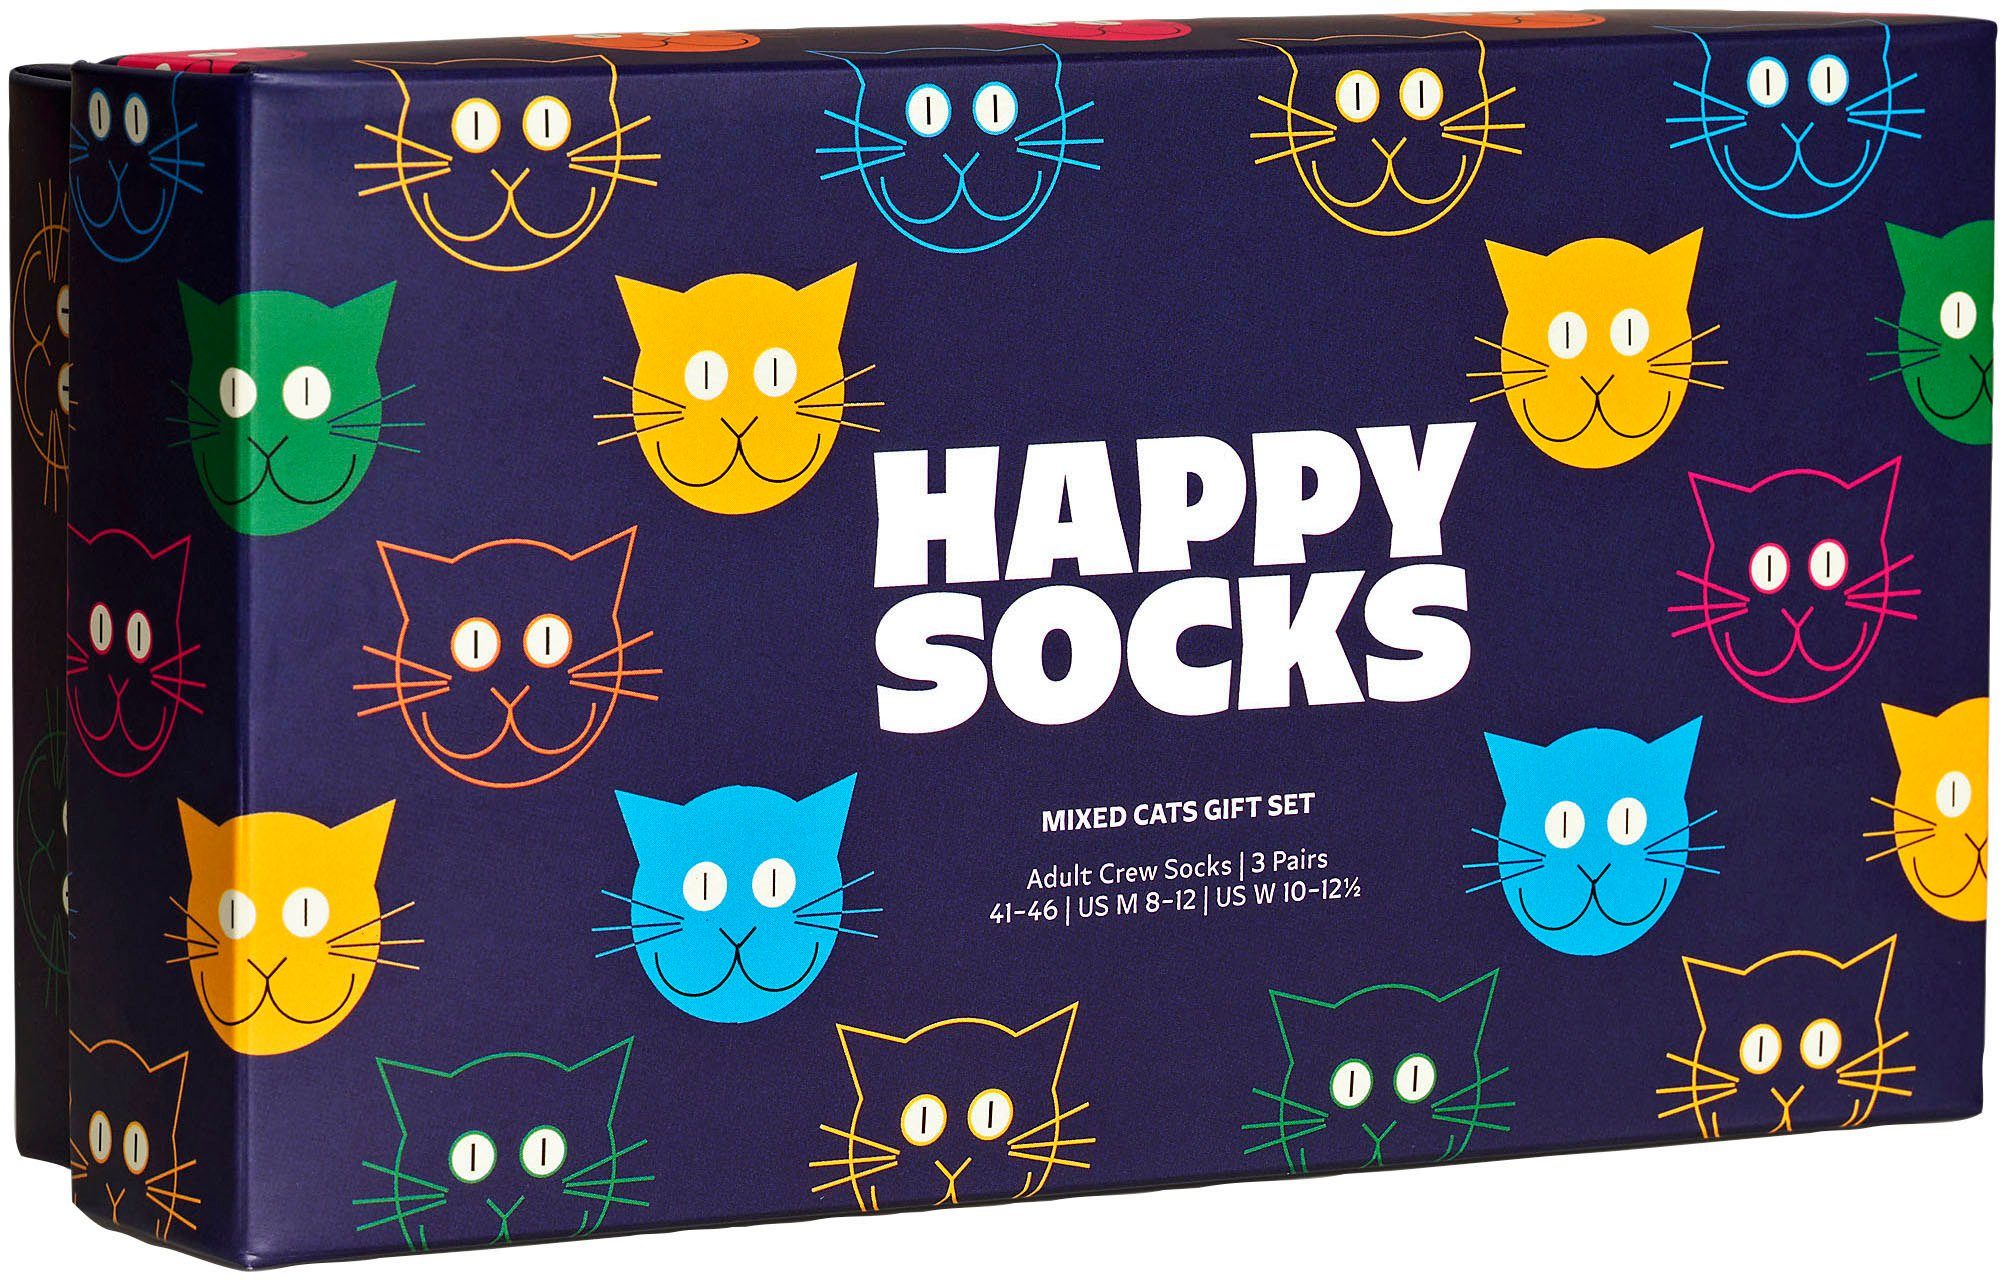 Cat Katzen-Motive Cat Socken Mixed Happy Gift 3-Pack Set Mixed Socks 2 Socks (Packung, 3-Paar)